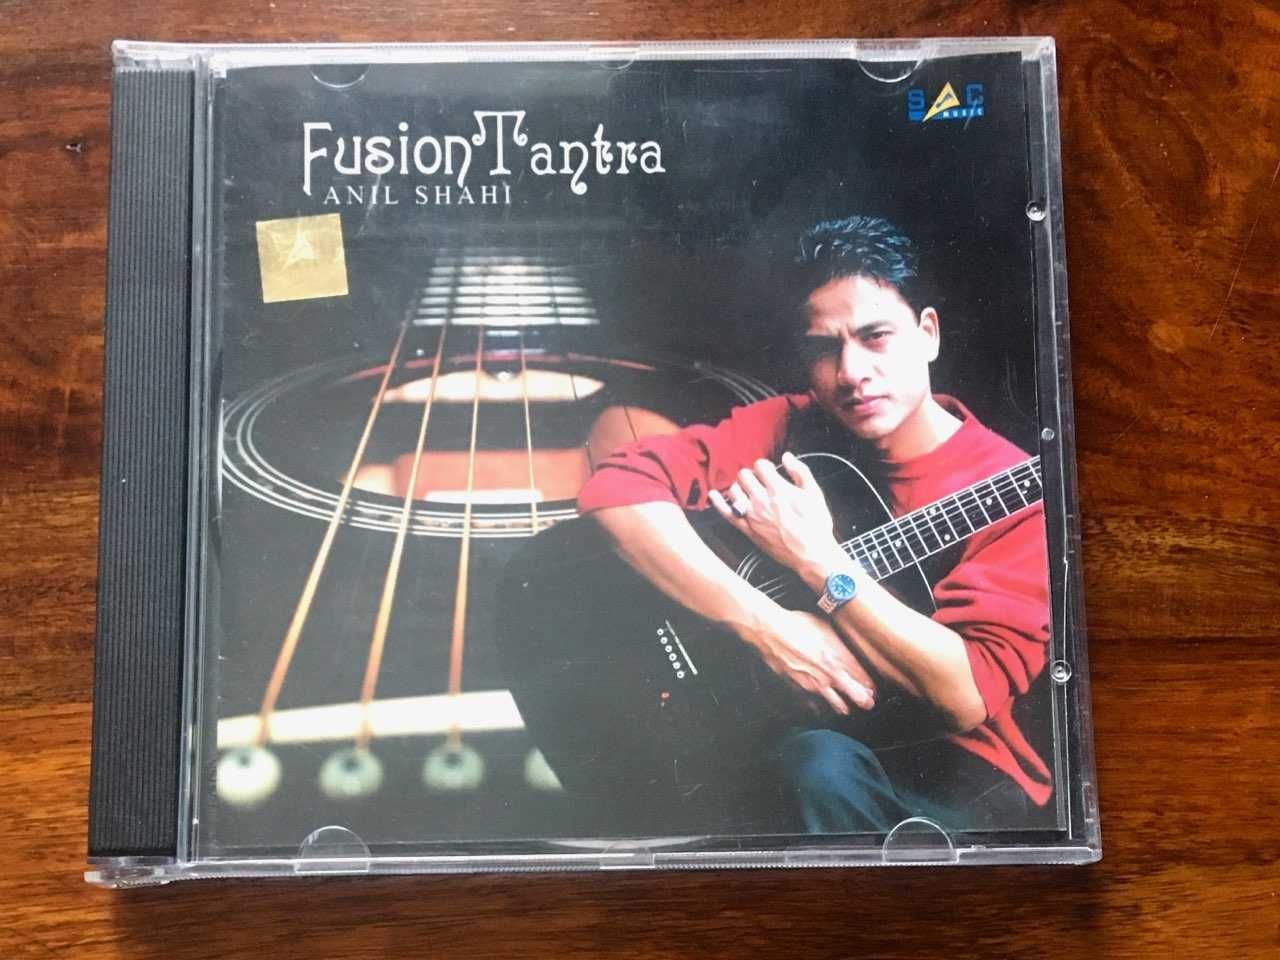 płyta cd - anil shahi - fusion tantra